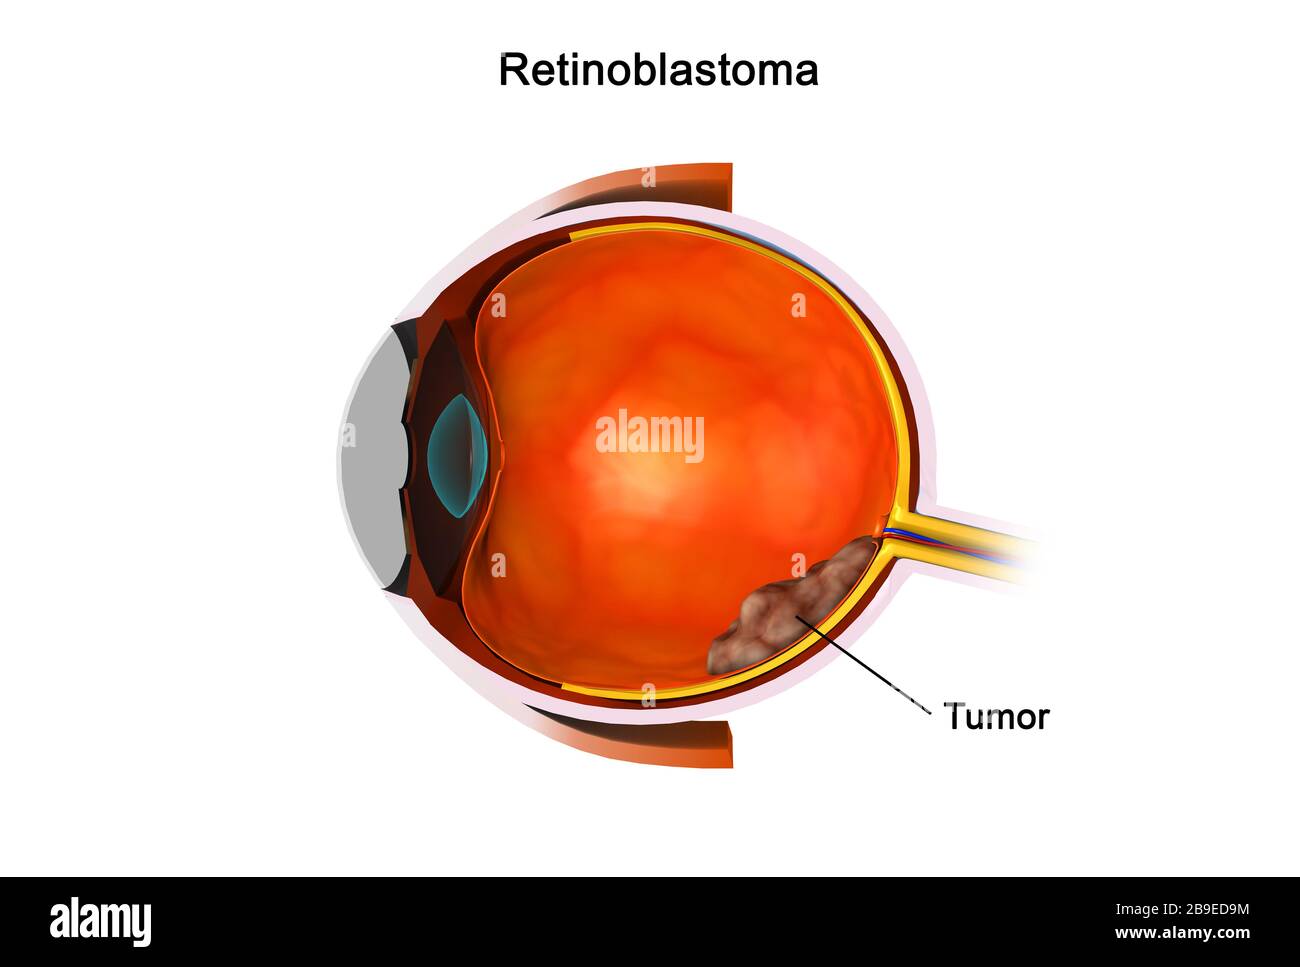 Medical illustration of retinoblastoma tumor in the retina of eye. Stock Photo